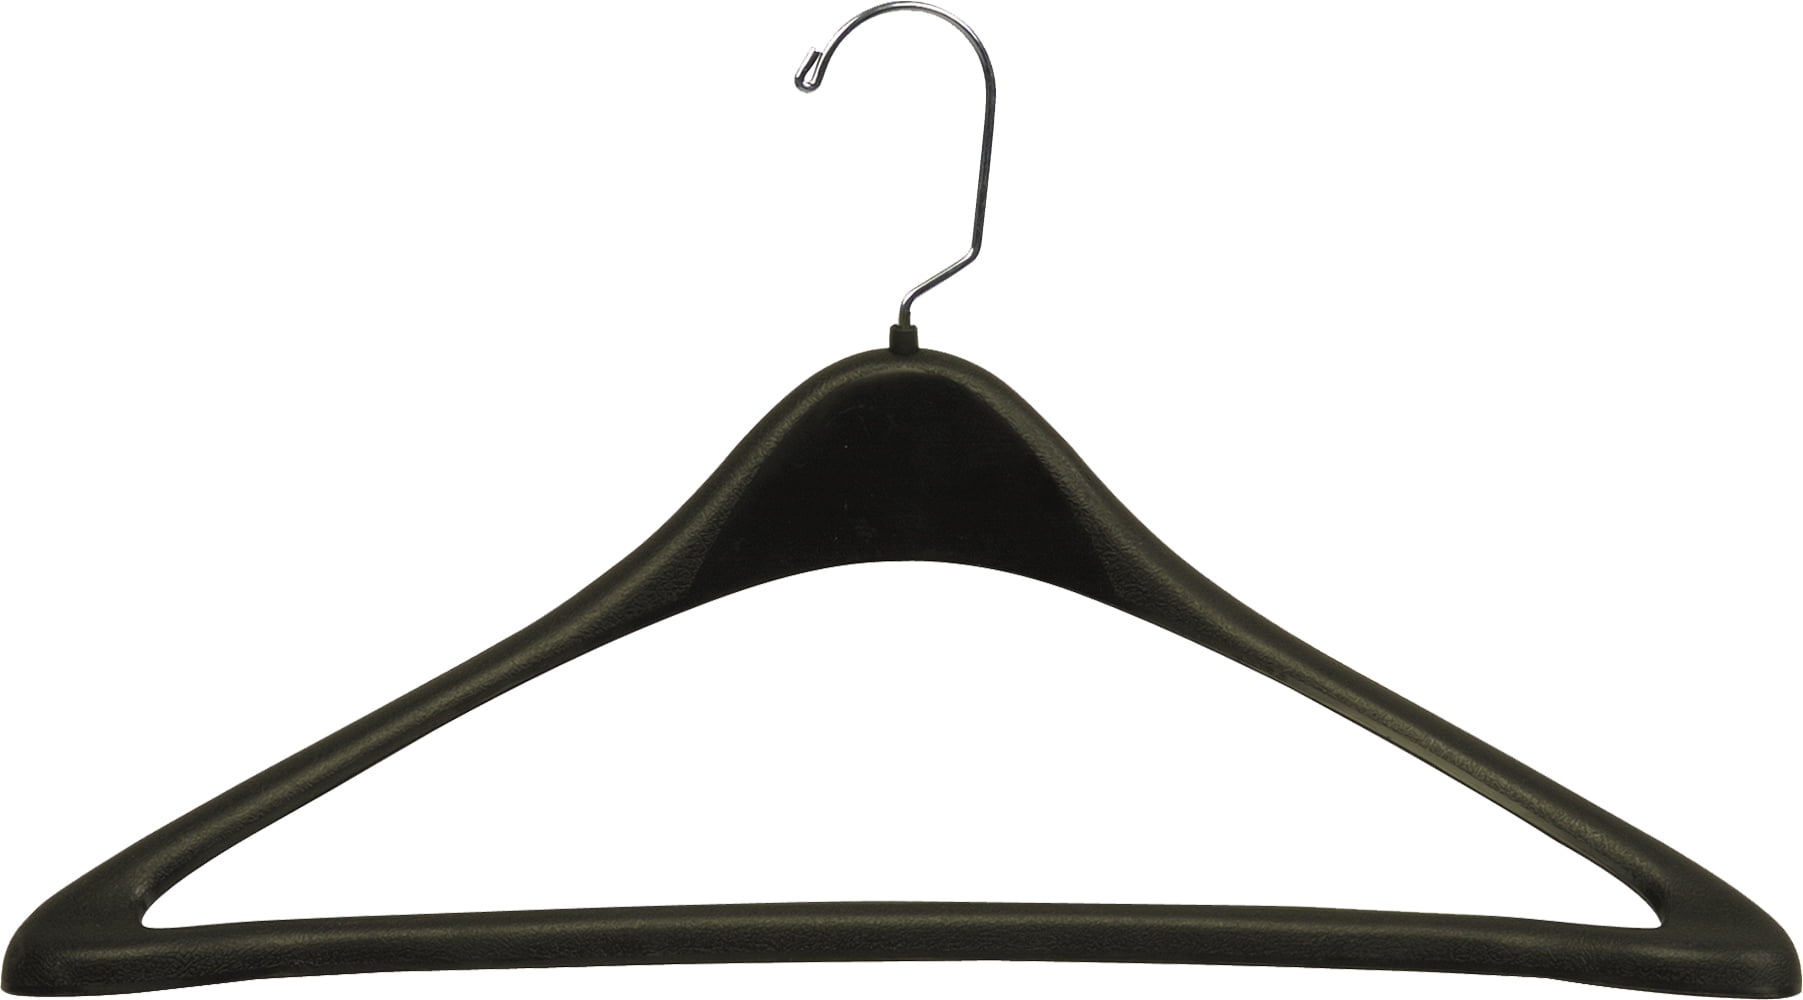 Standard Clothing Hangers HOUSE DAY Black Plastic Hangers,50 Pack Plastic Clothes Hangers for Skirt Suit Coat